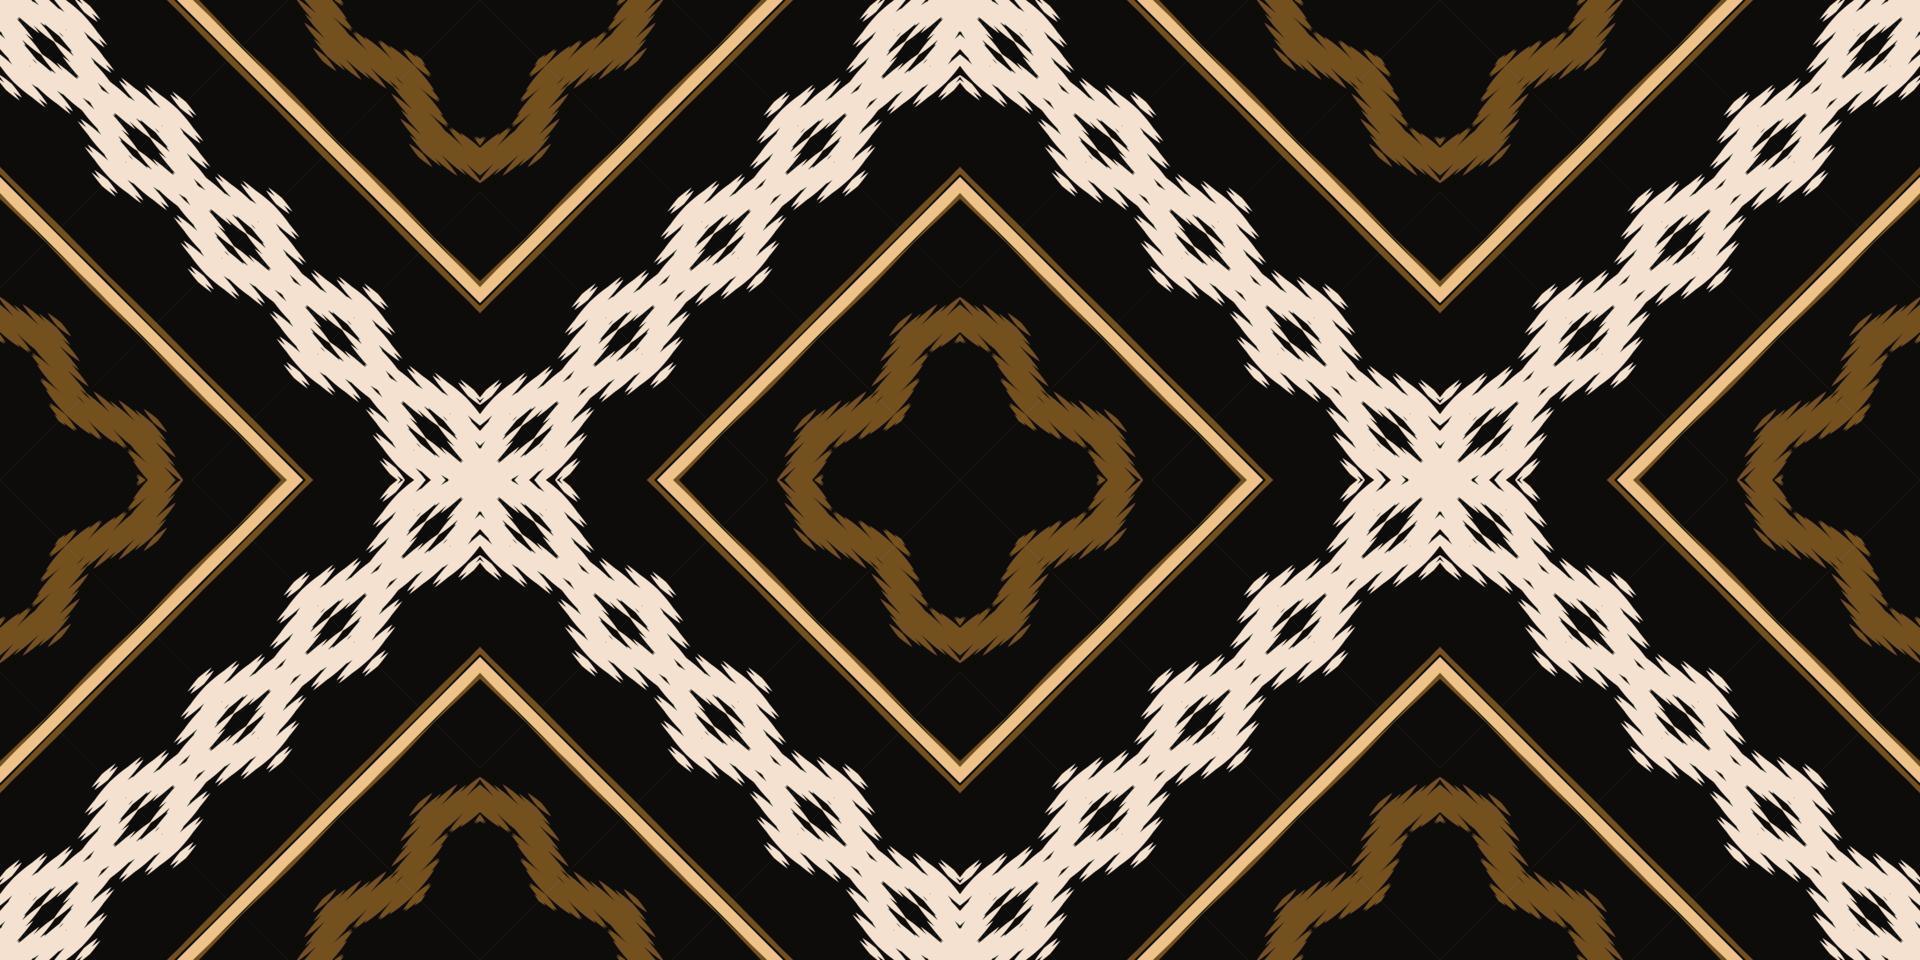 motivo ikat flor batik textil patrón sin costuras diseño vectorial digital para imprimir sari kurti borde de tela símbolos de pincel muestras elegantes vector